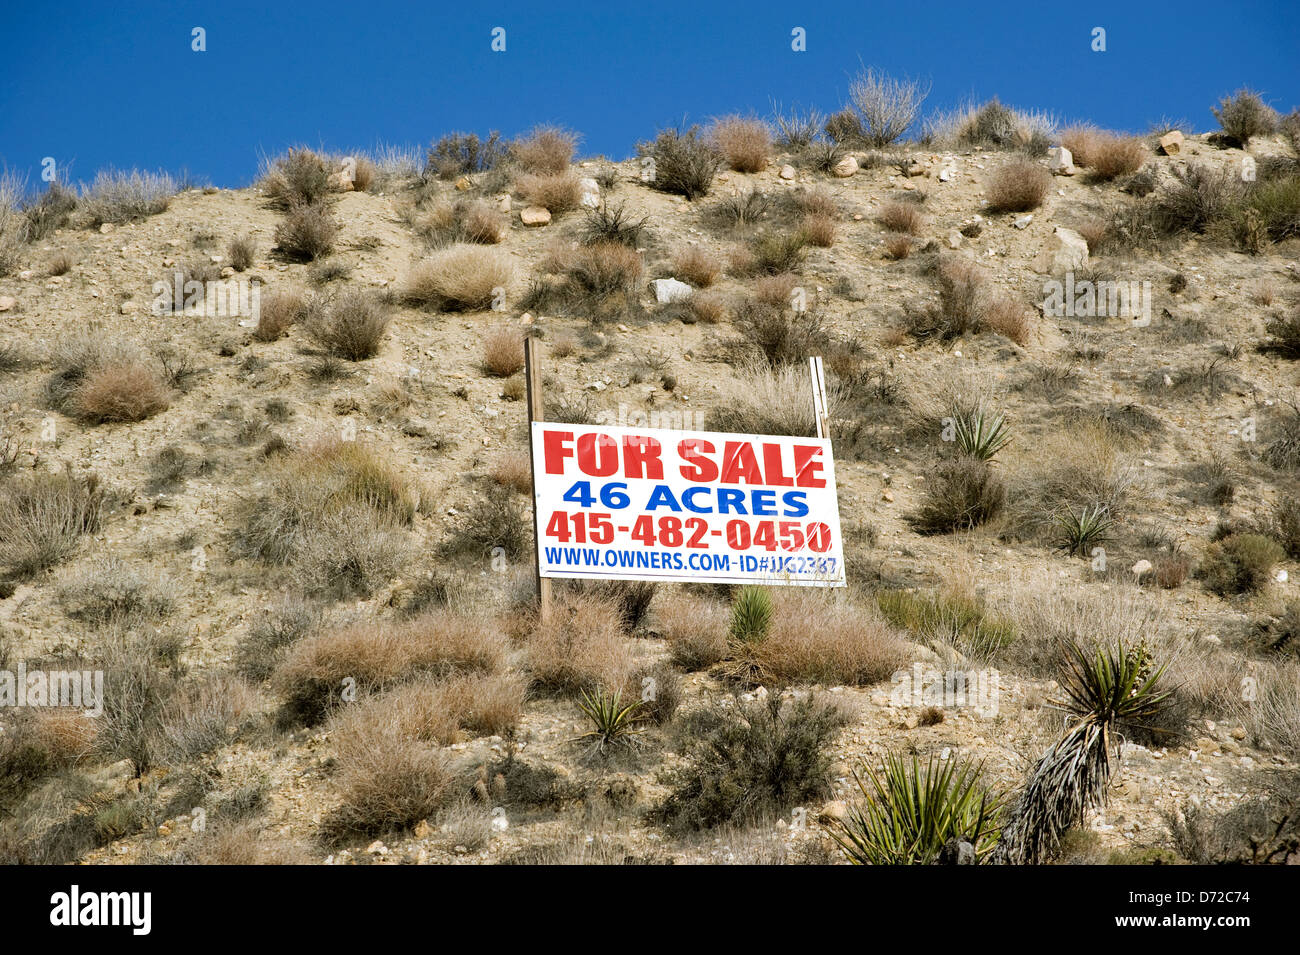 land for sale sign in desert Stock Photo